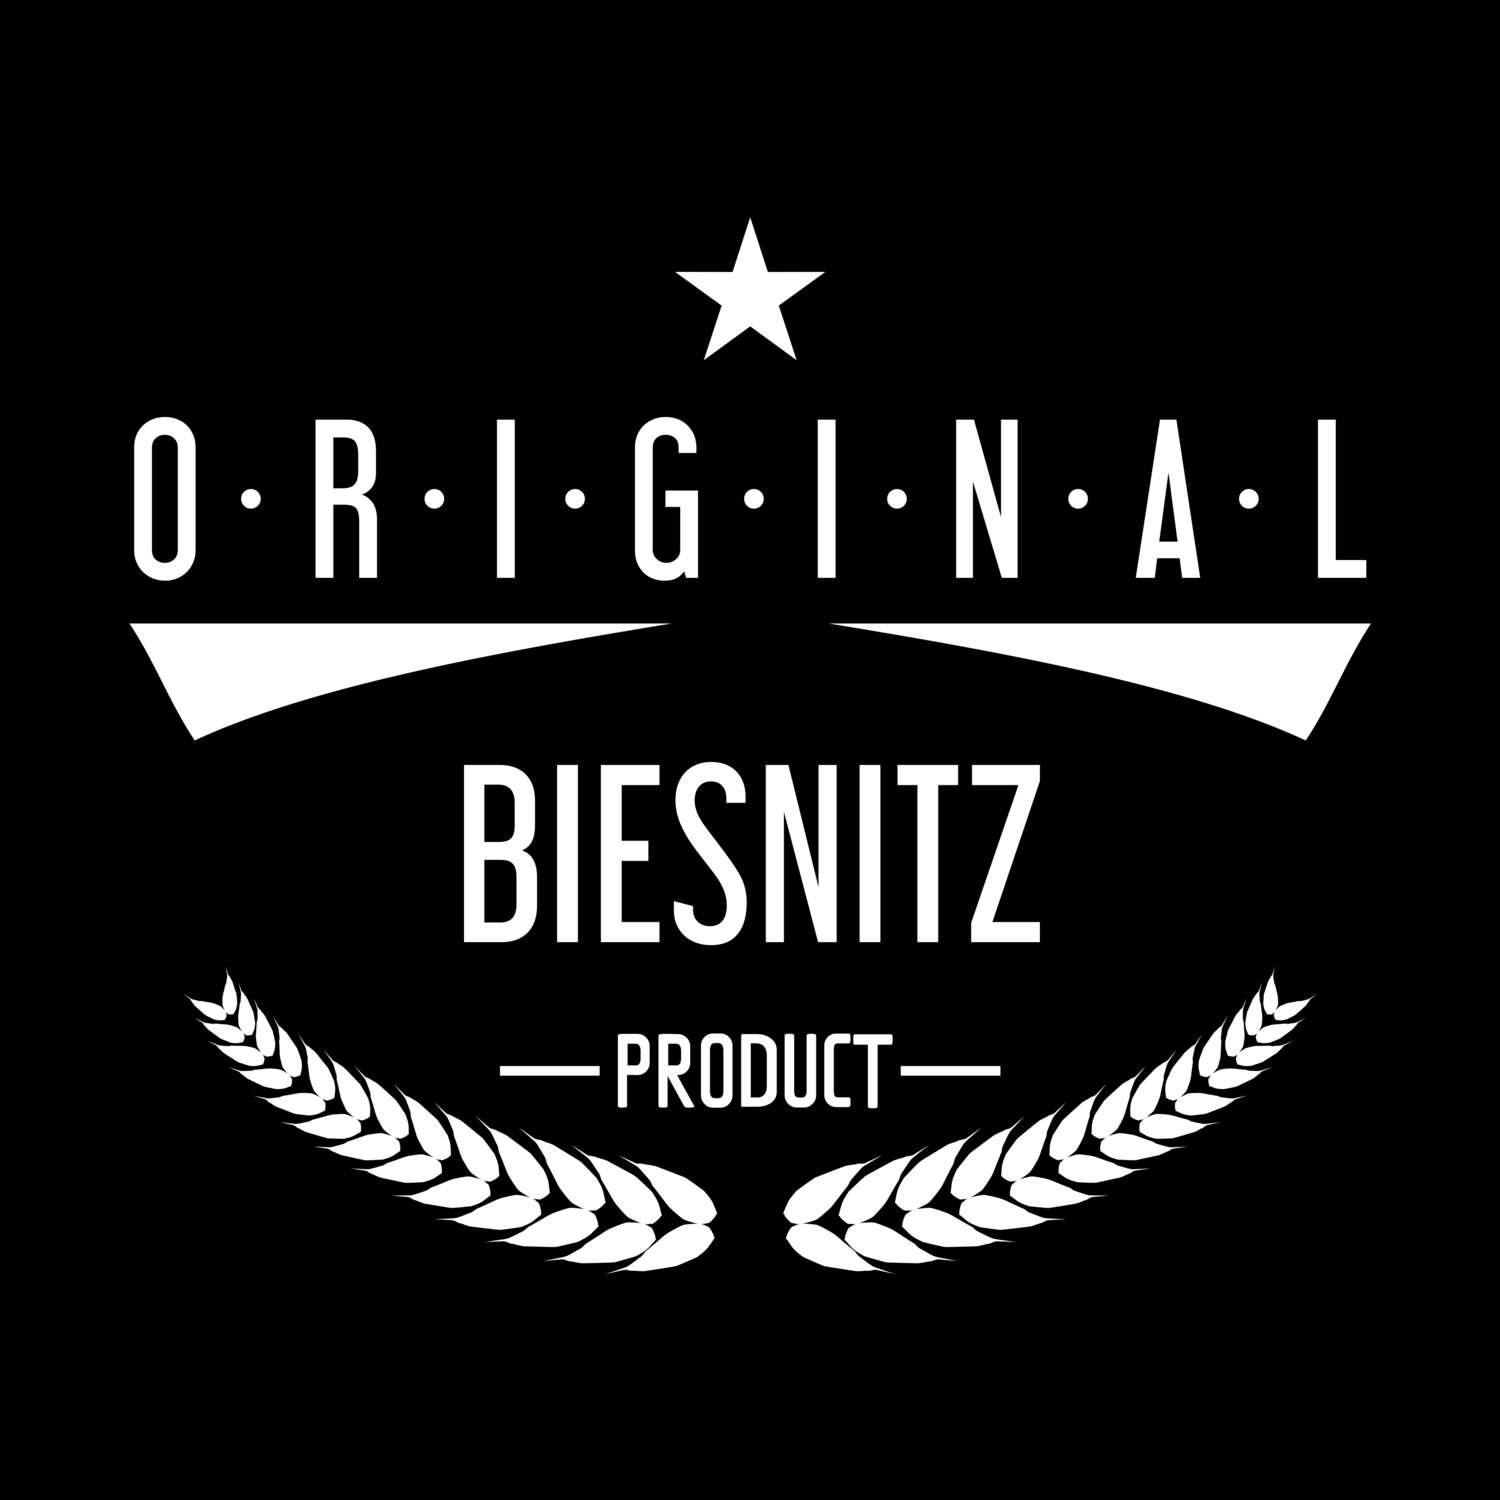 Biesnitz T-Shirt »Original Product«